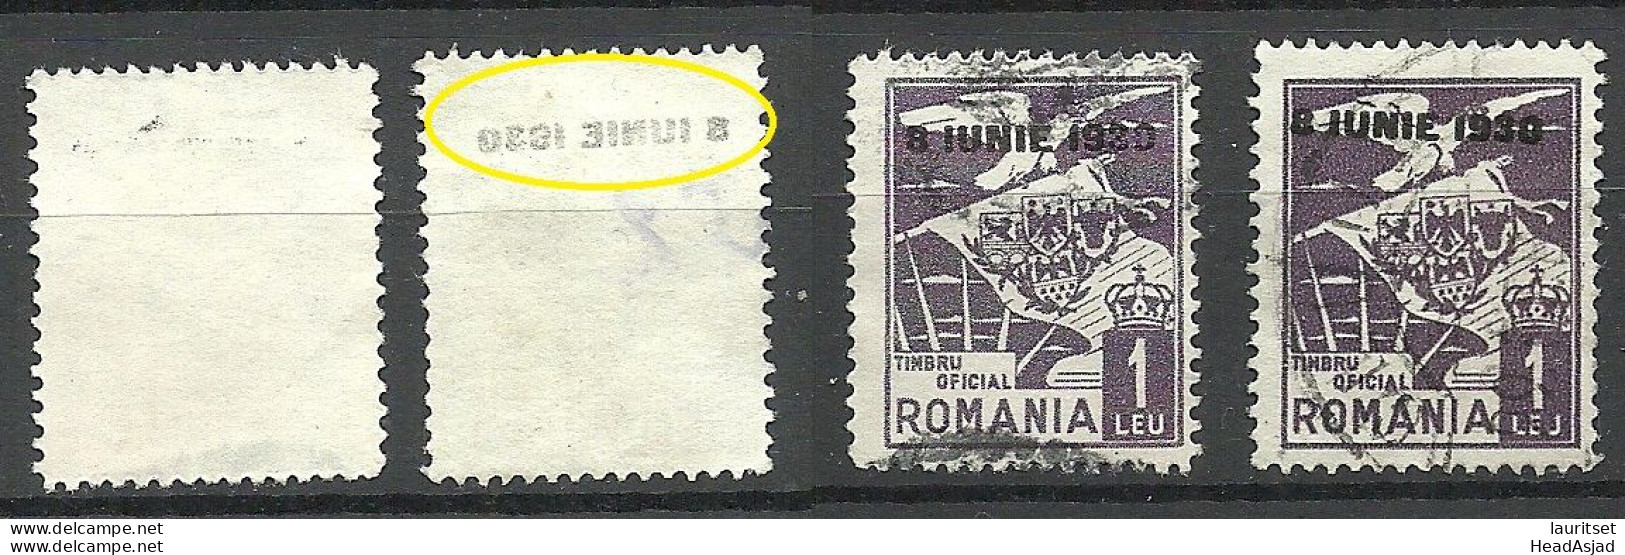 ROMANIA Rumänien 1930 Dienstmarke Normal + Variety Set Off Of OPT Abklatsch D. Aufdruckes - Dienstmarken